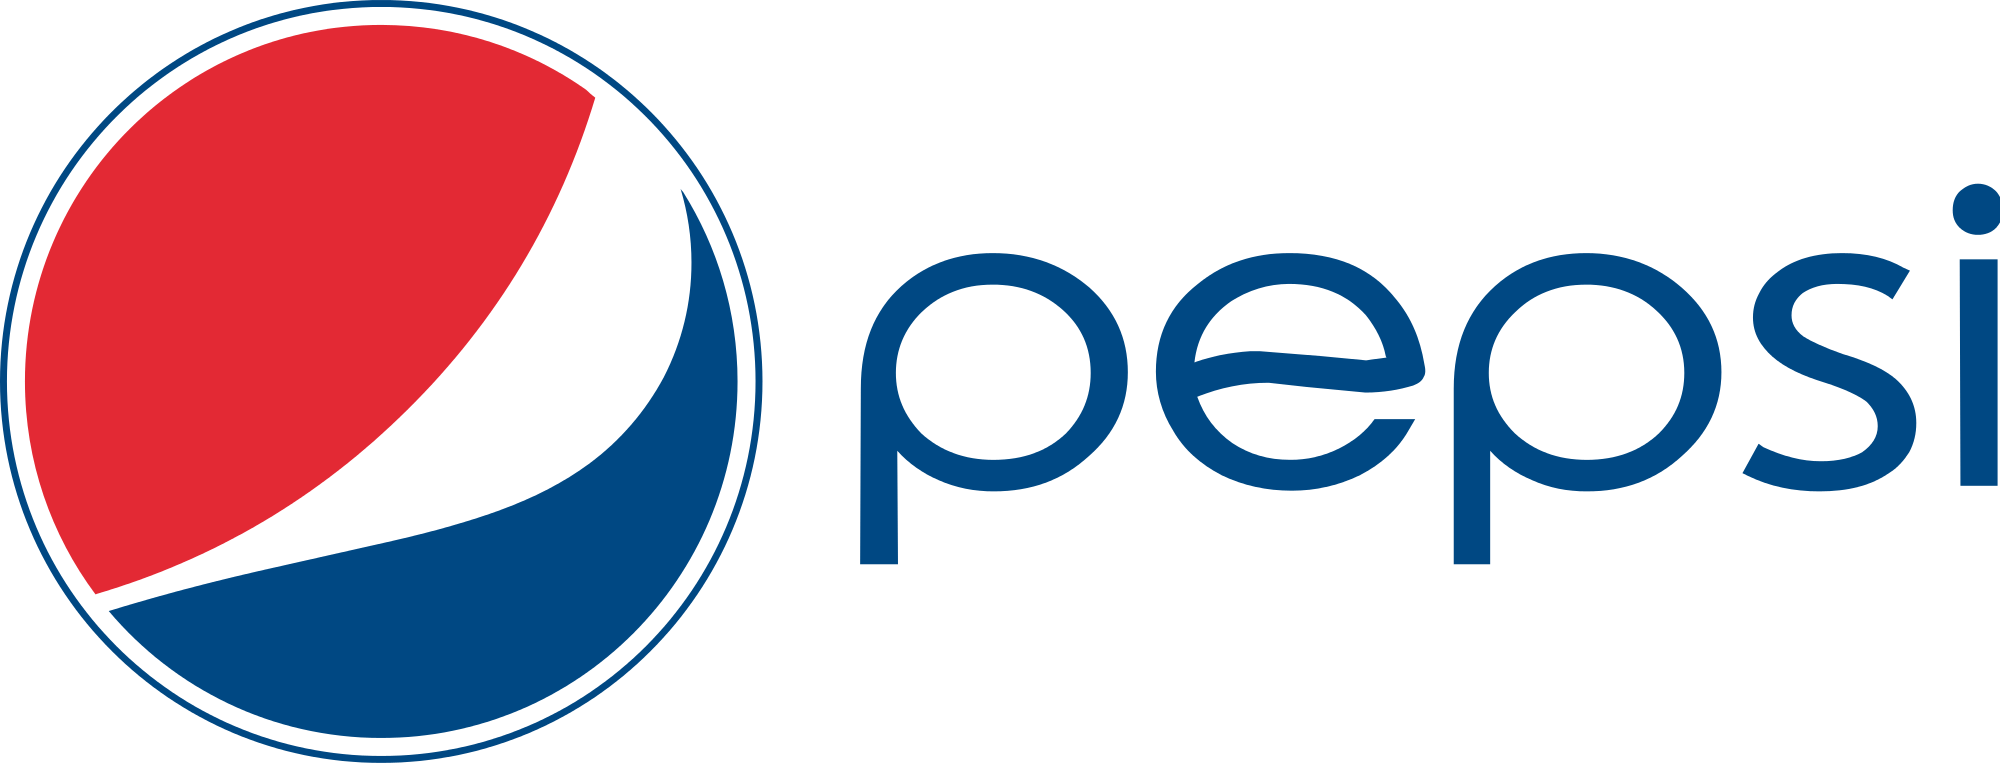 Pepsi Logo - File:Pepsi logo 2008.svg - Wikimedia Commons